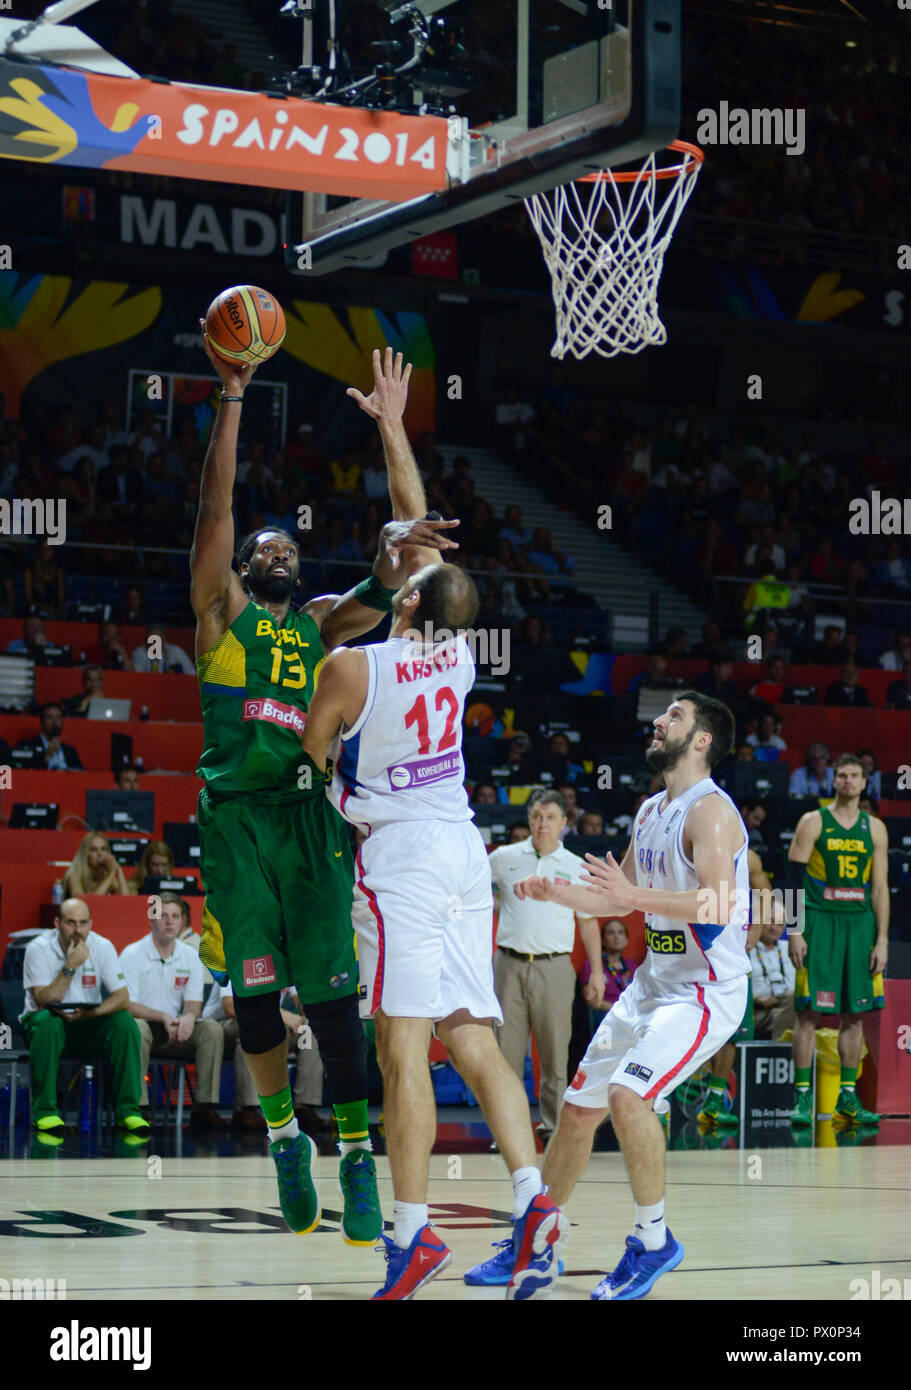 Nene Hilario (Brazil) scoring over Nenad Krstic (Serbia). Basketball World Cup Spain 2014 Stock Photo